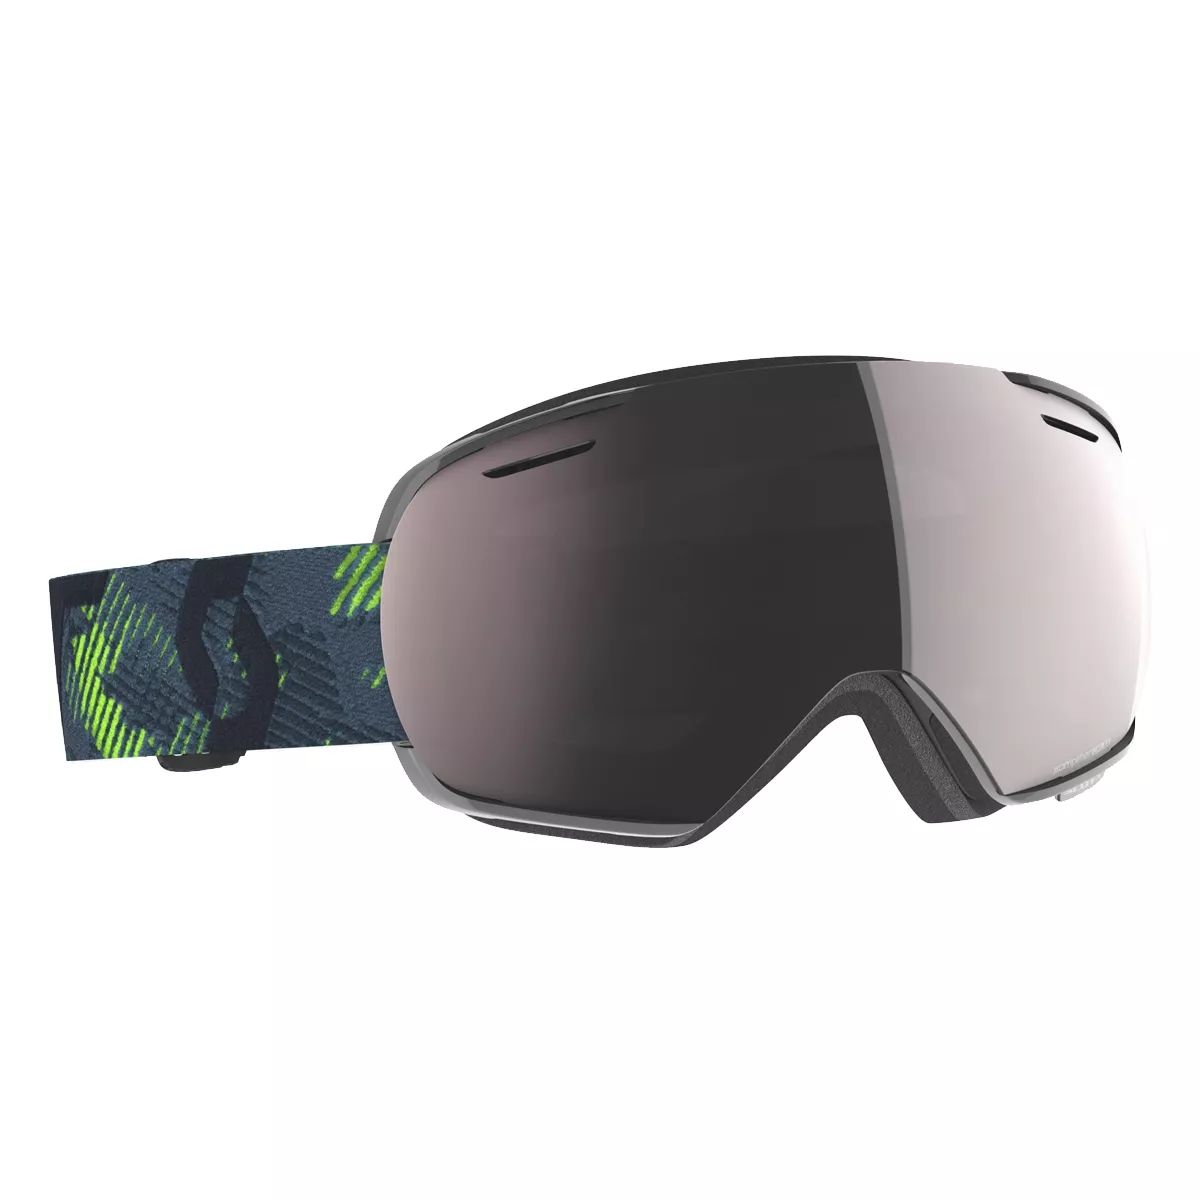 Scott Linx Ski & Snowboard Goggles 2020/21 - Ultralime Green/Storm Grey with Enhancer Silver Chrome Lens